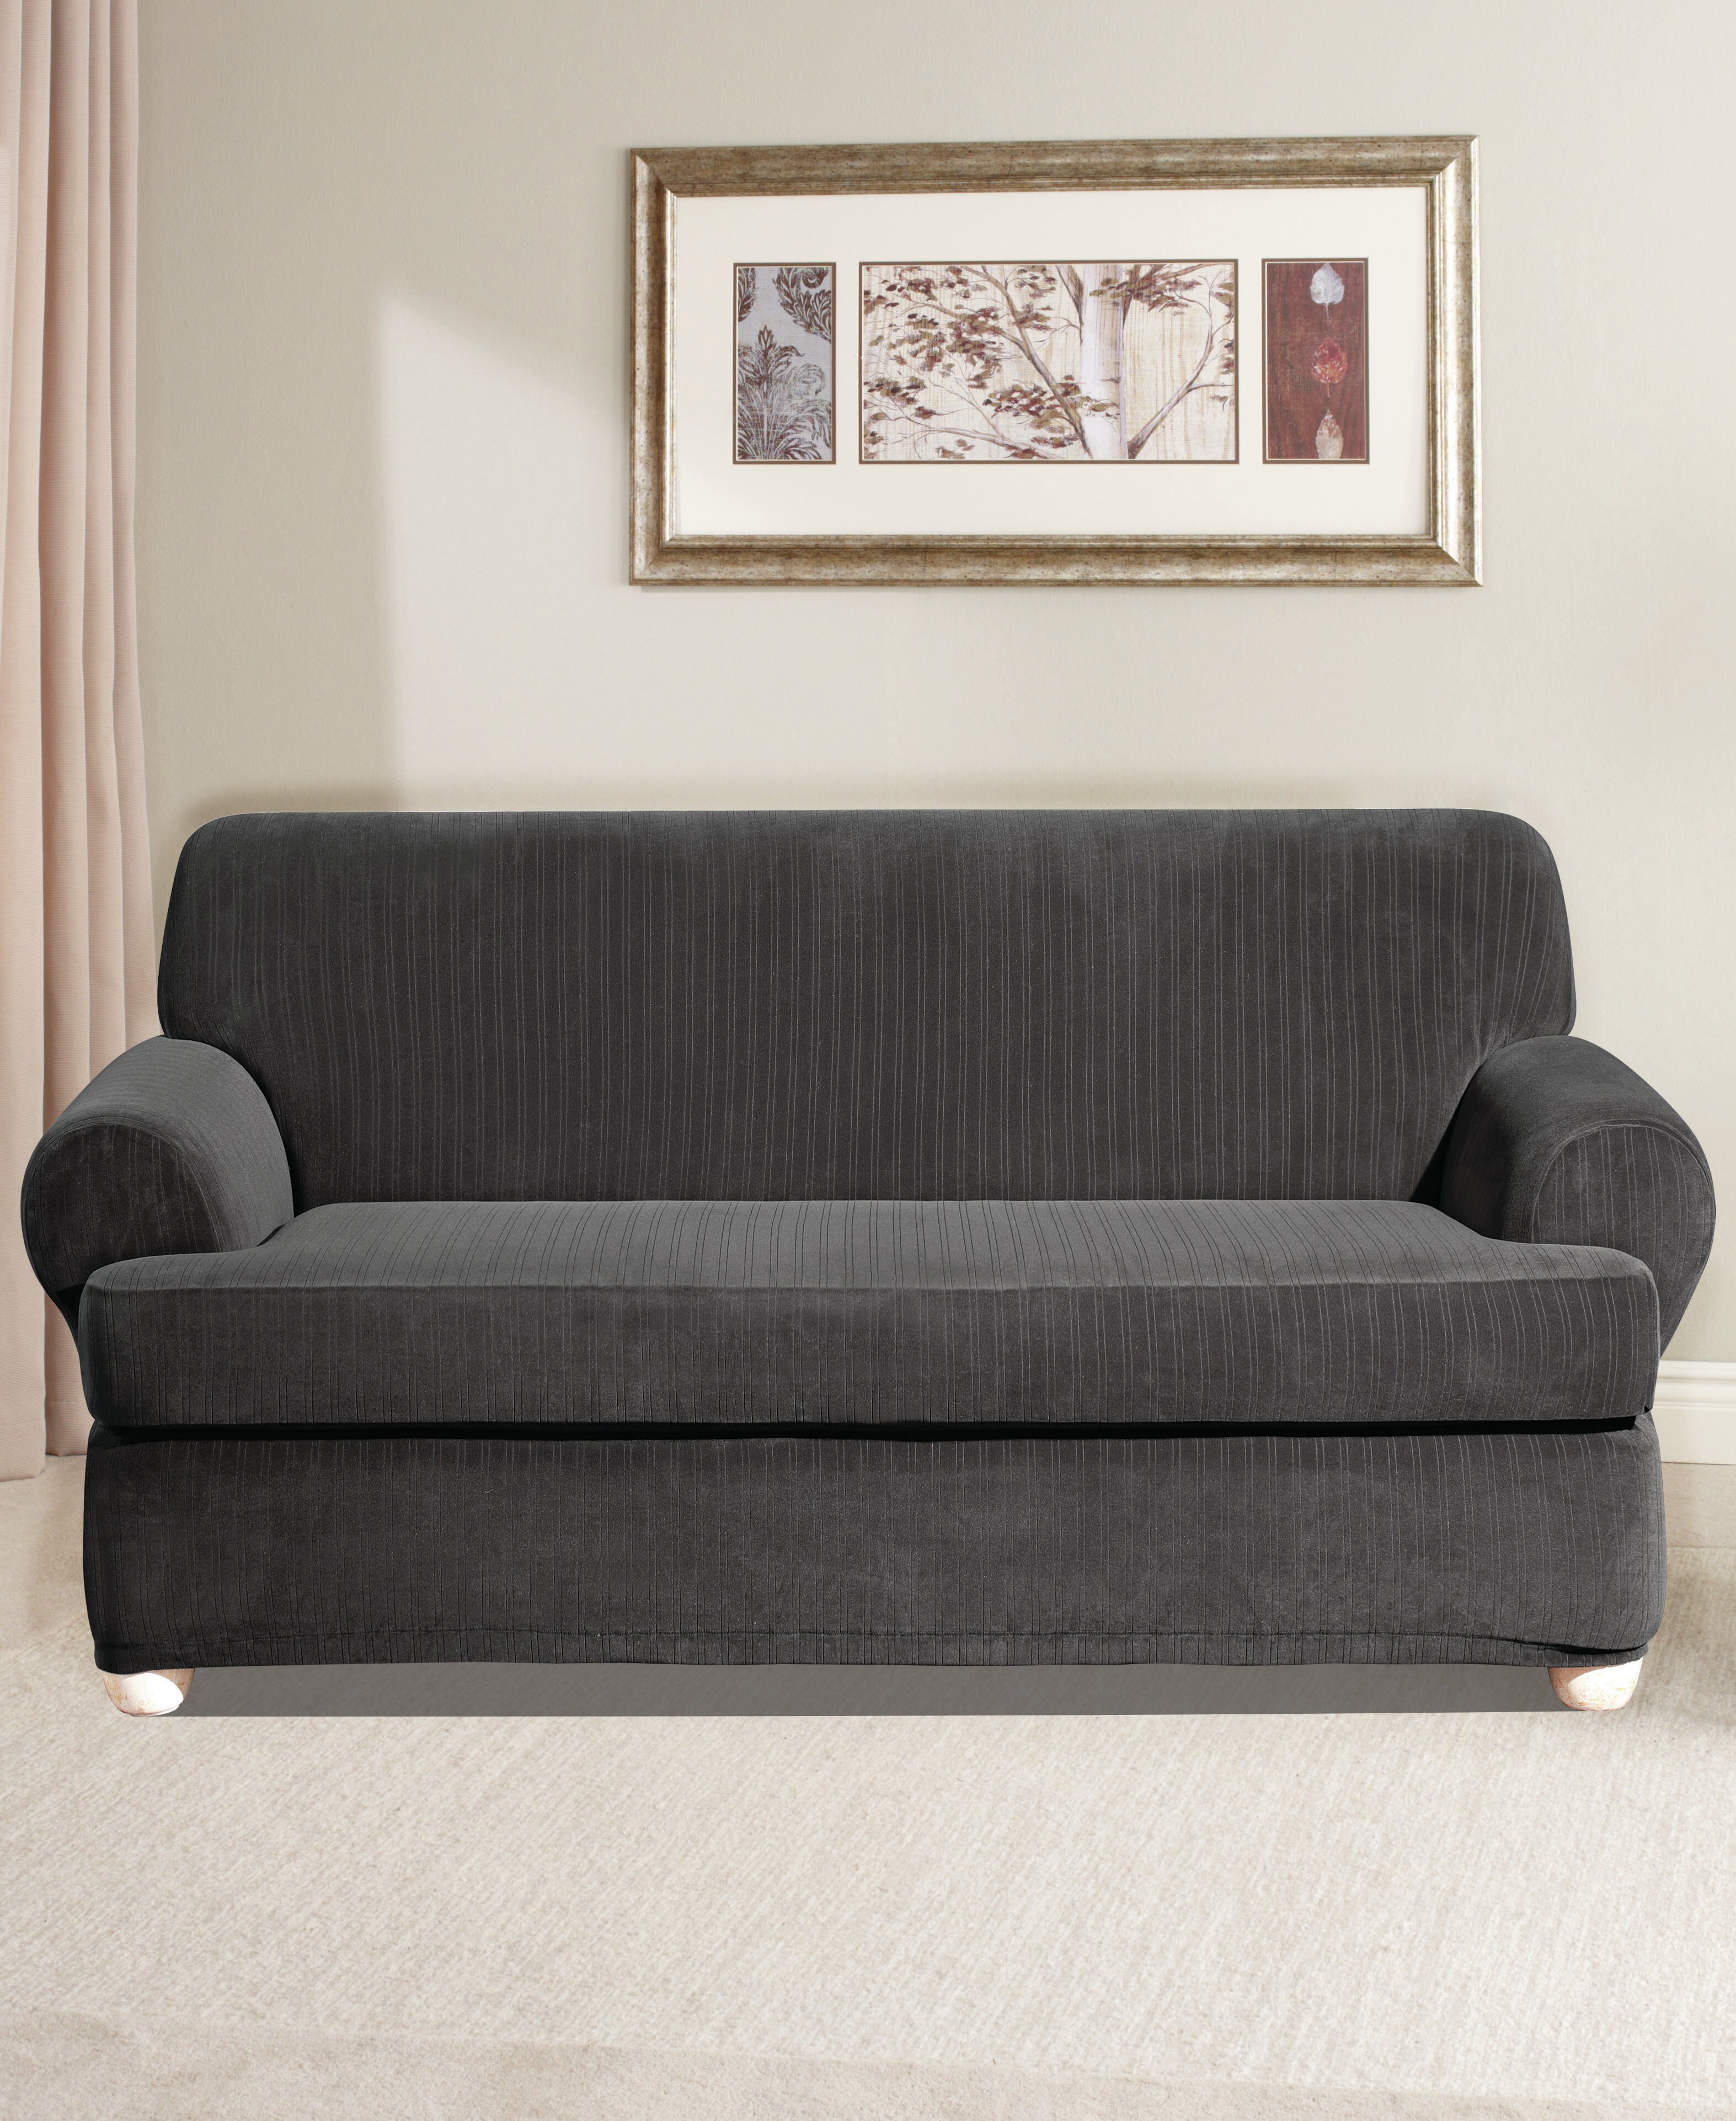 3 cushion sofa slipcovers grey